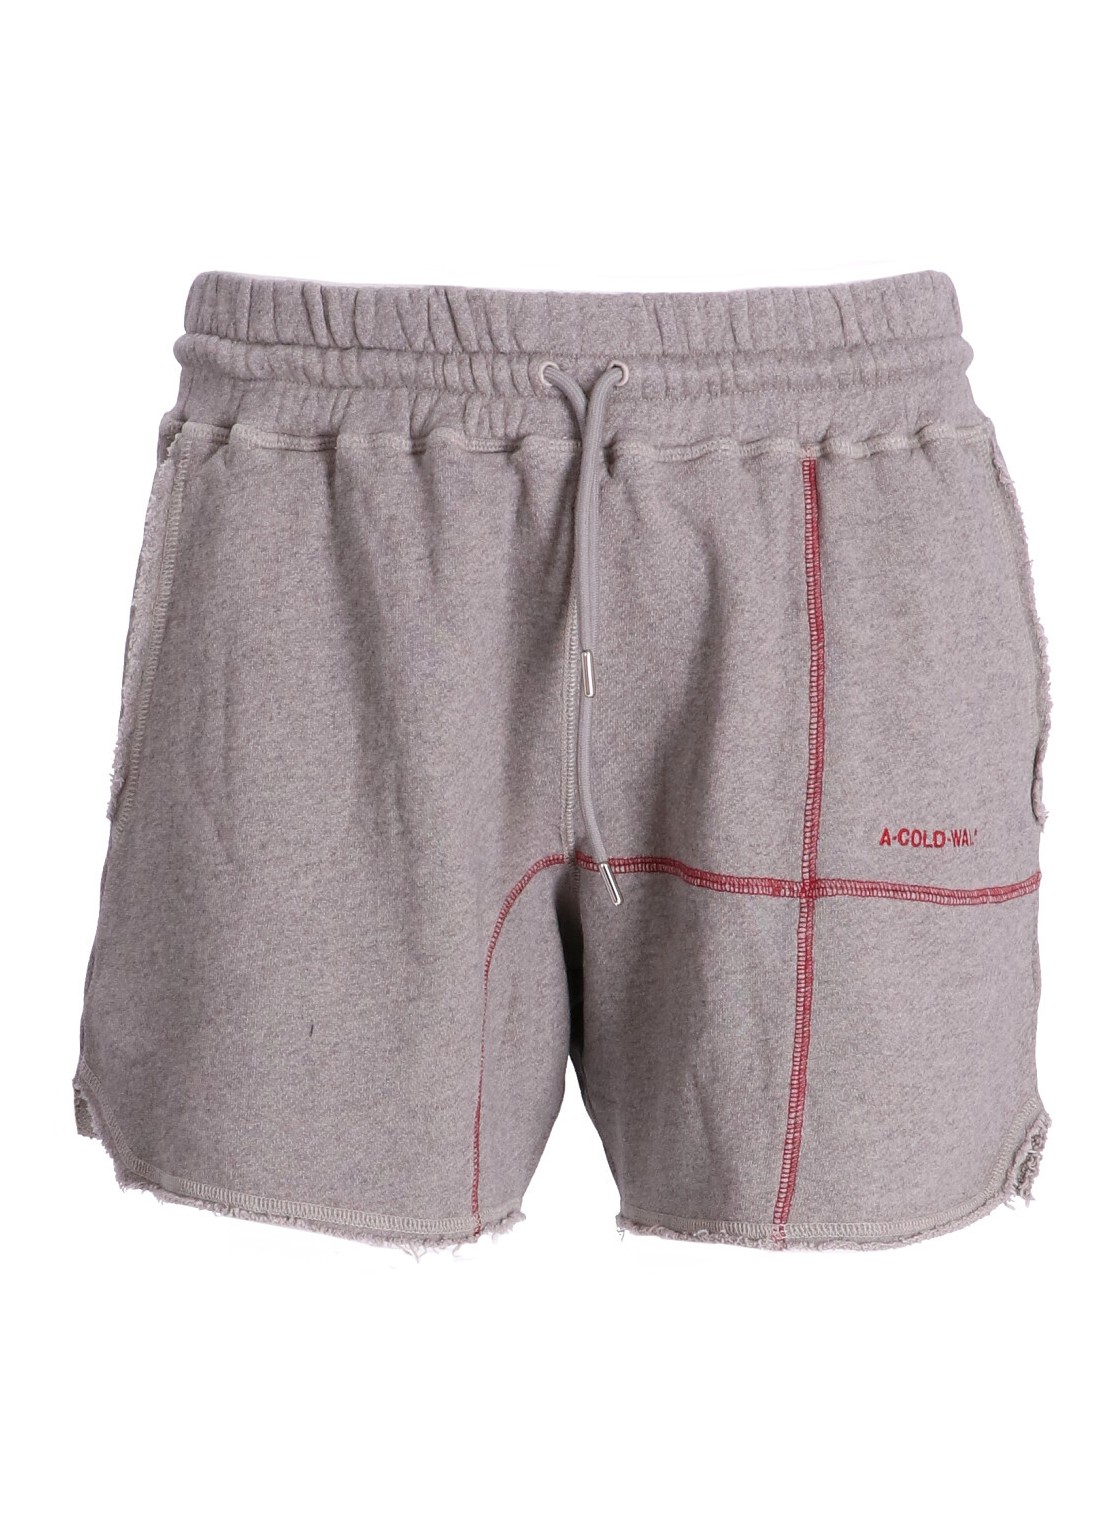 Pantalon corto a-cold-wall* short pant man intersect sweatshort acwmb275 cement cemt talla L
 